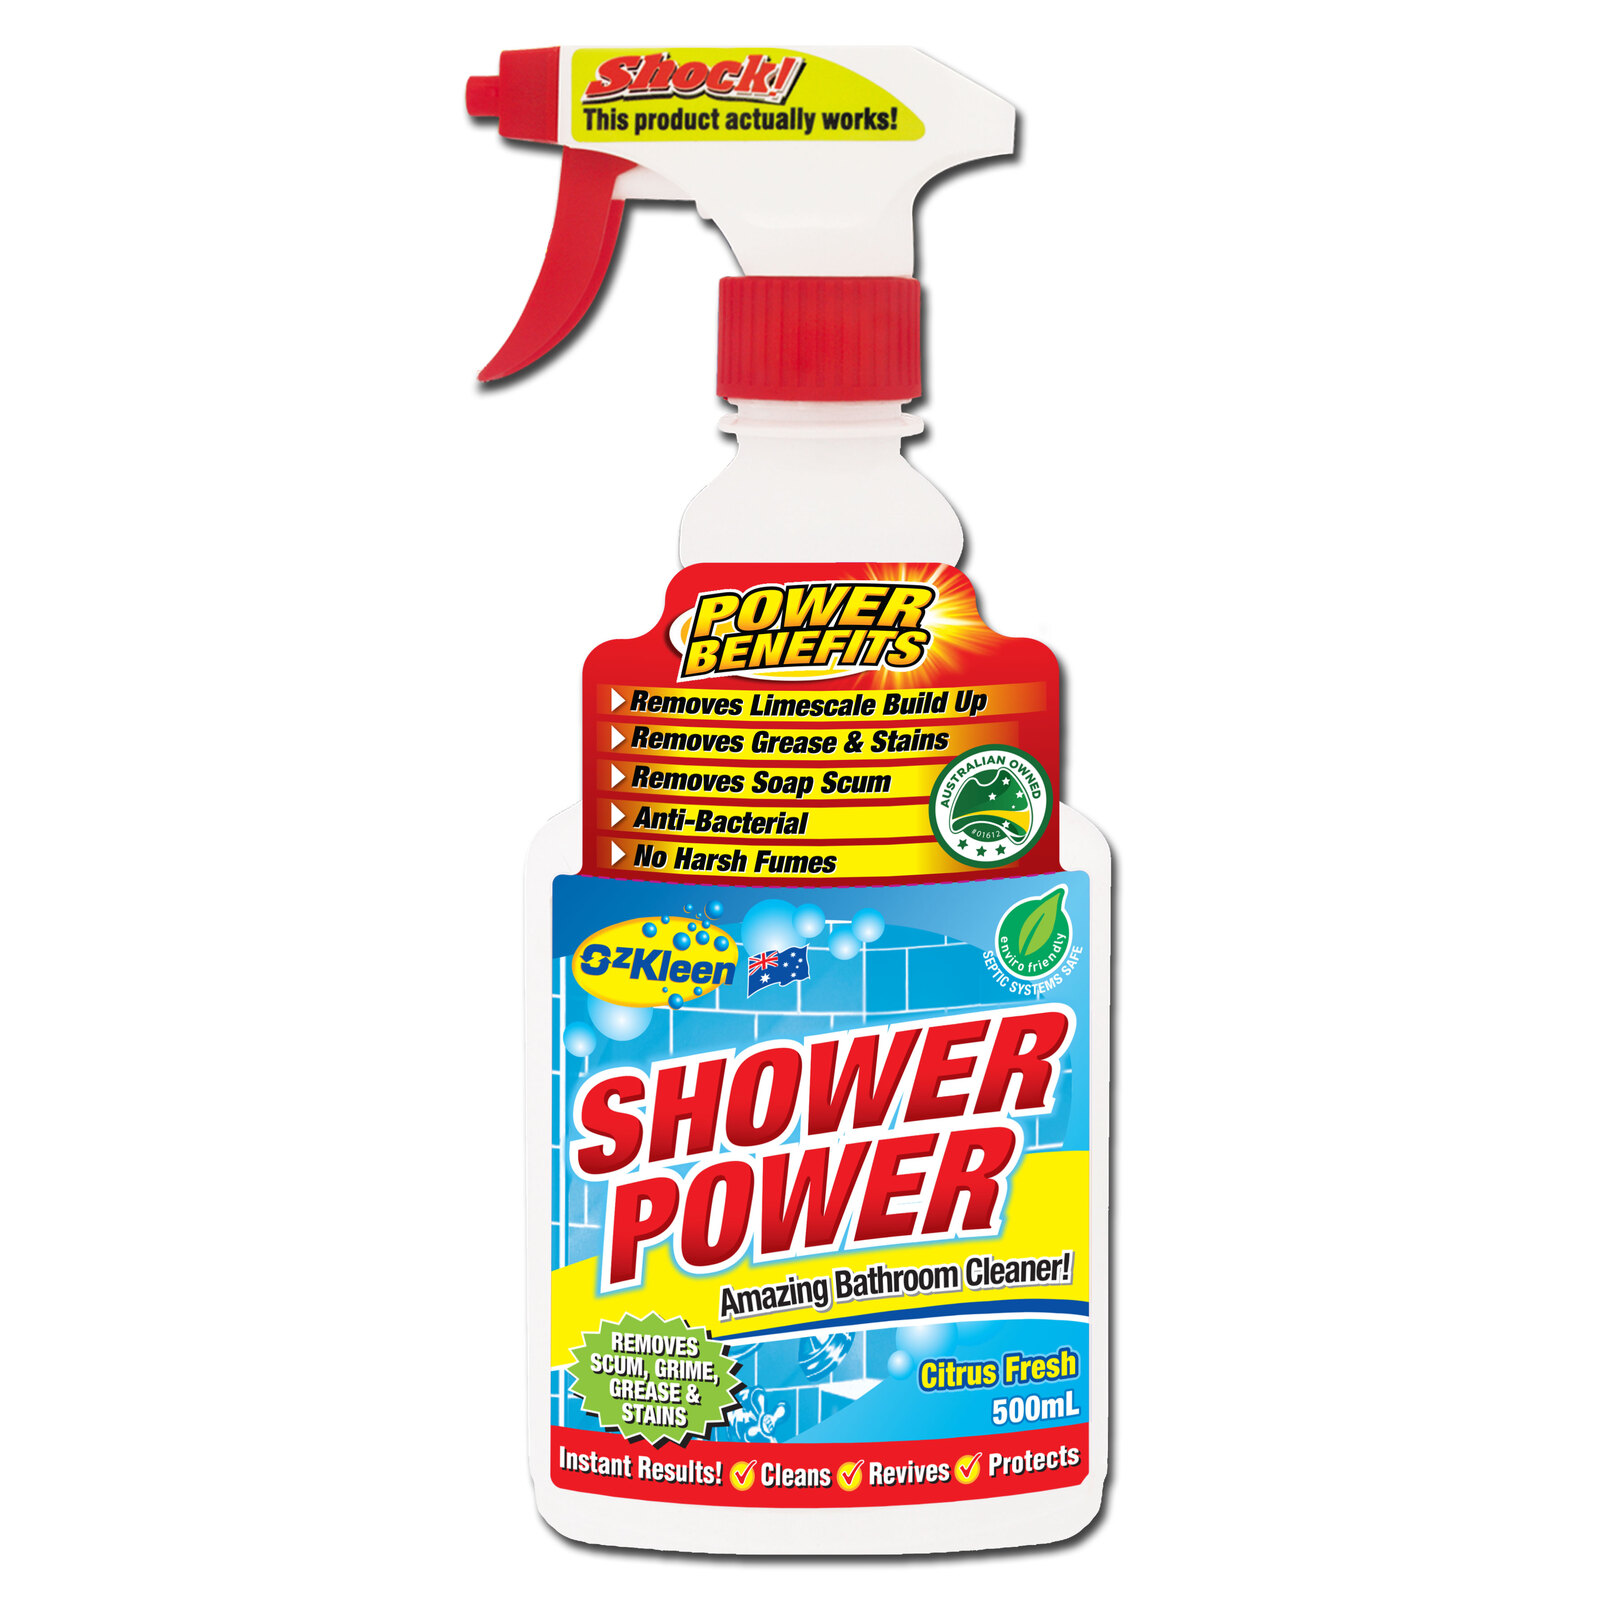 Shower Power - Amazing Bathroom cleaner